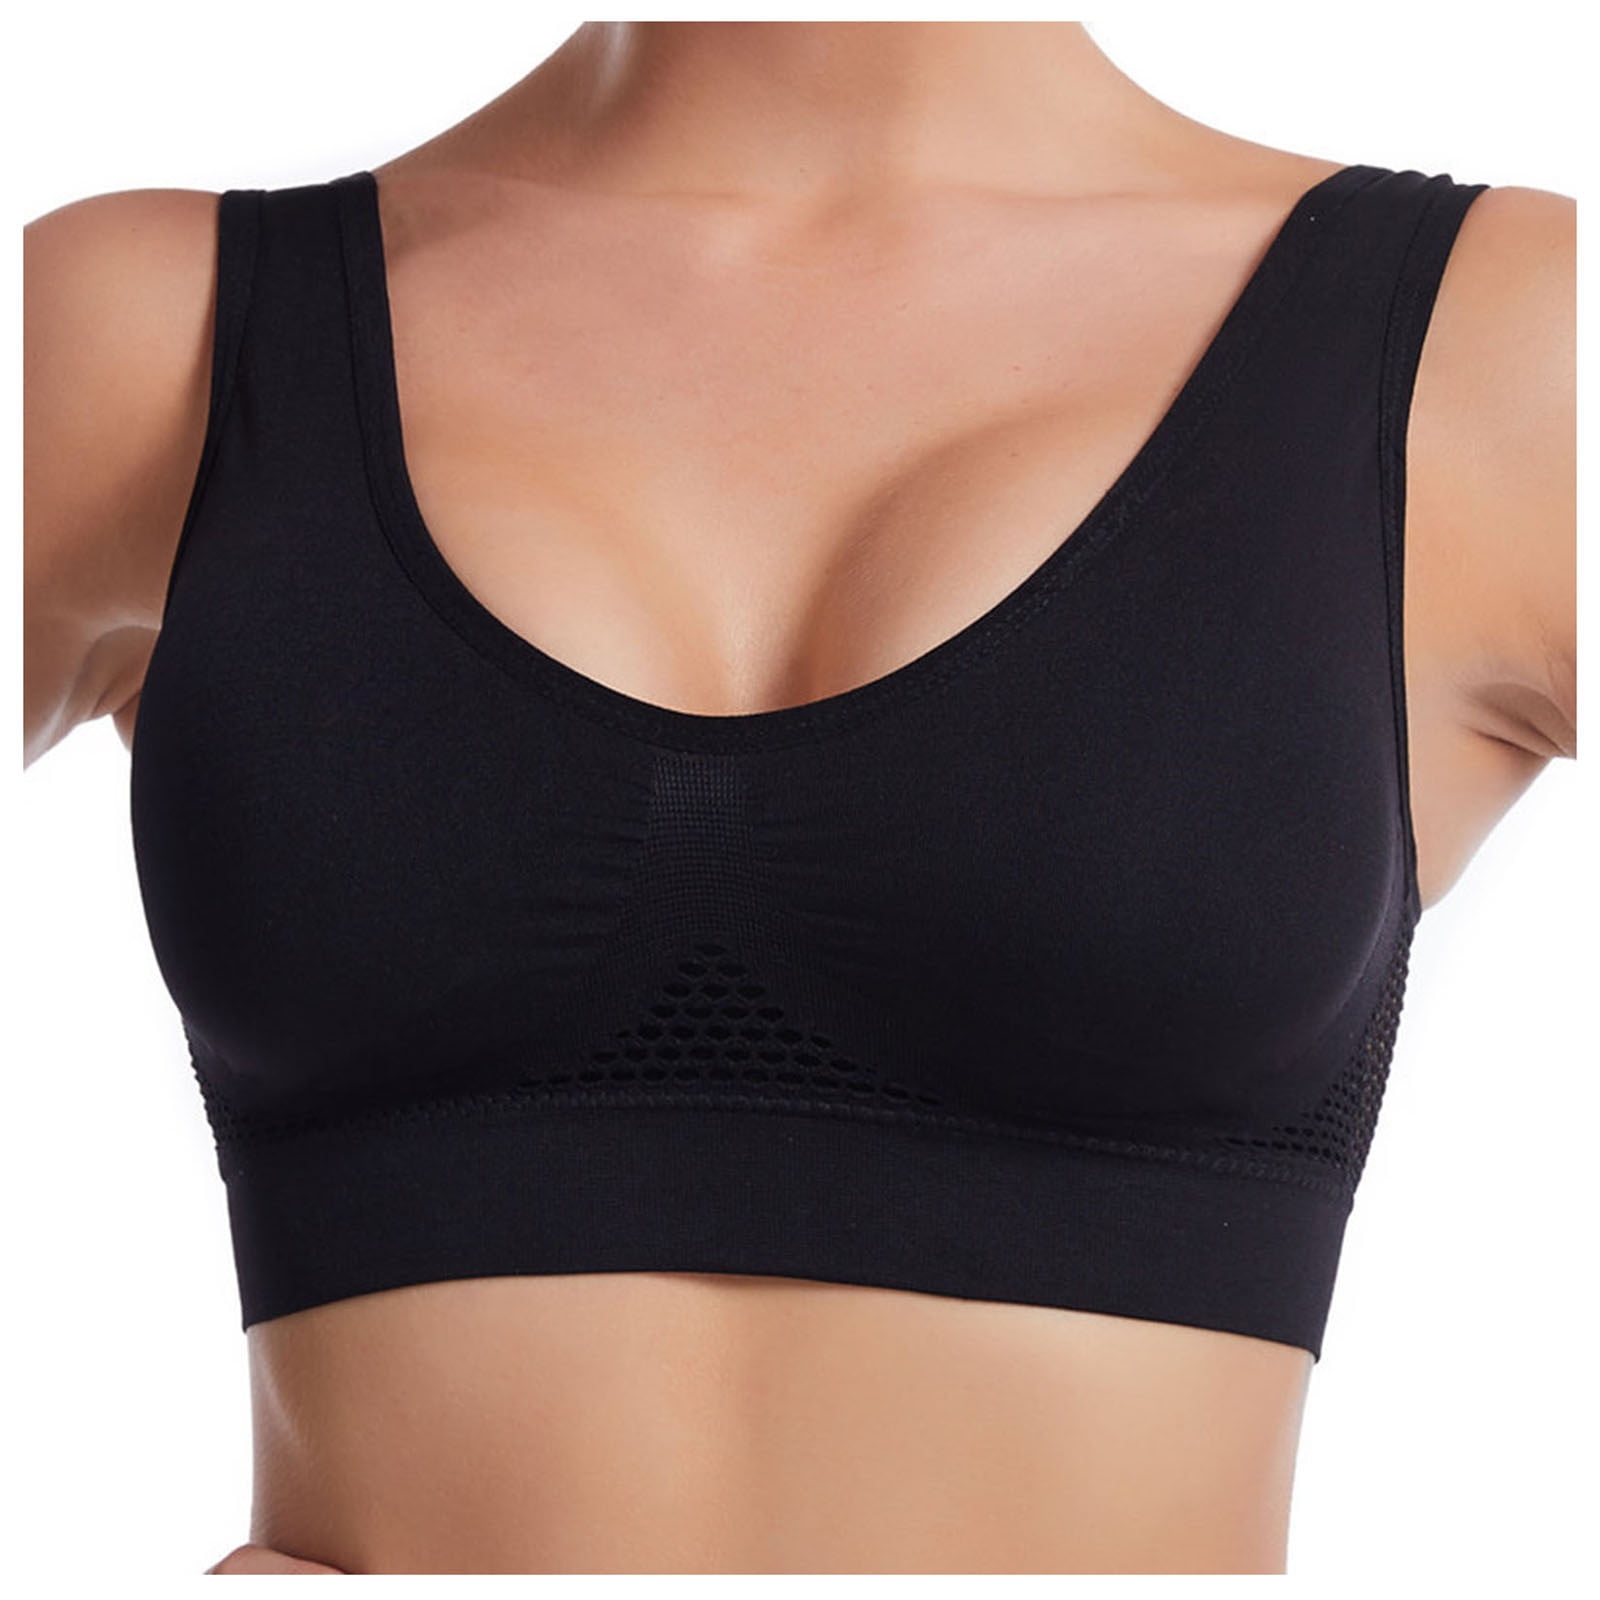 Tawop Plus Size Sports Bras for Women 4X-5X Women'S Vest Yoga